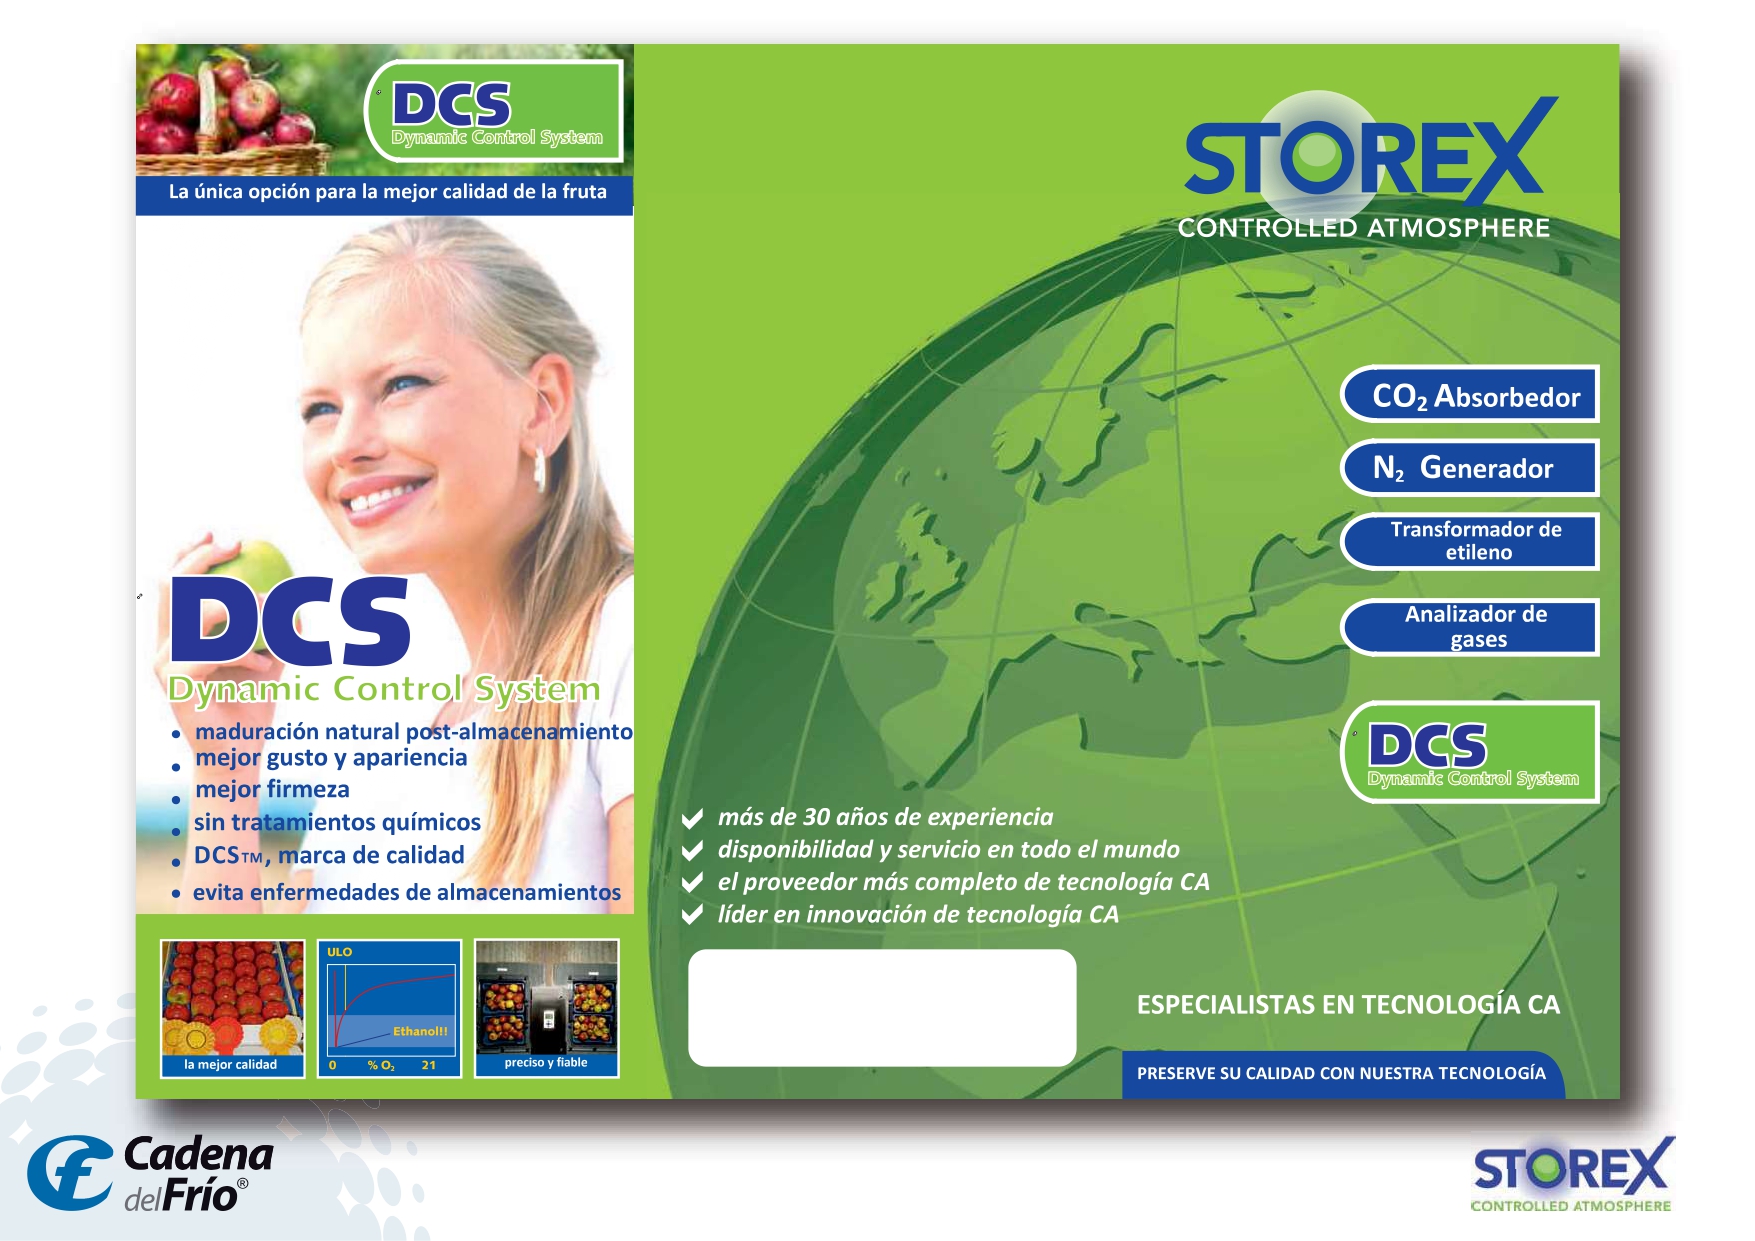 Catálogo comercial DCS. Atmósfera controlada